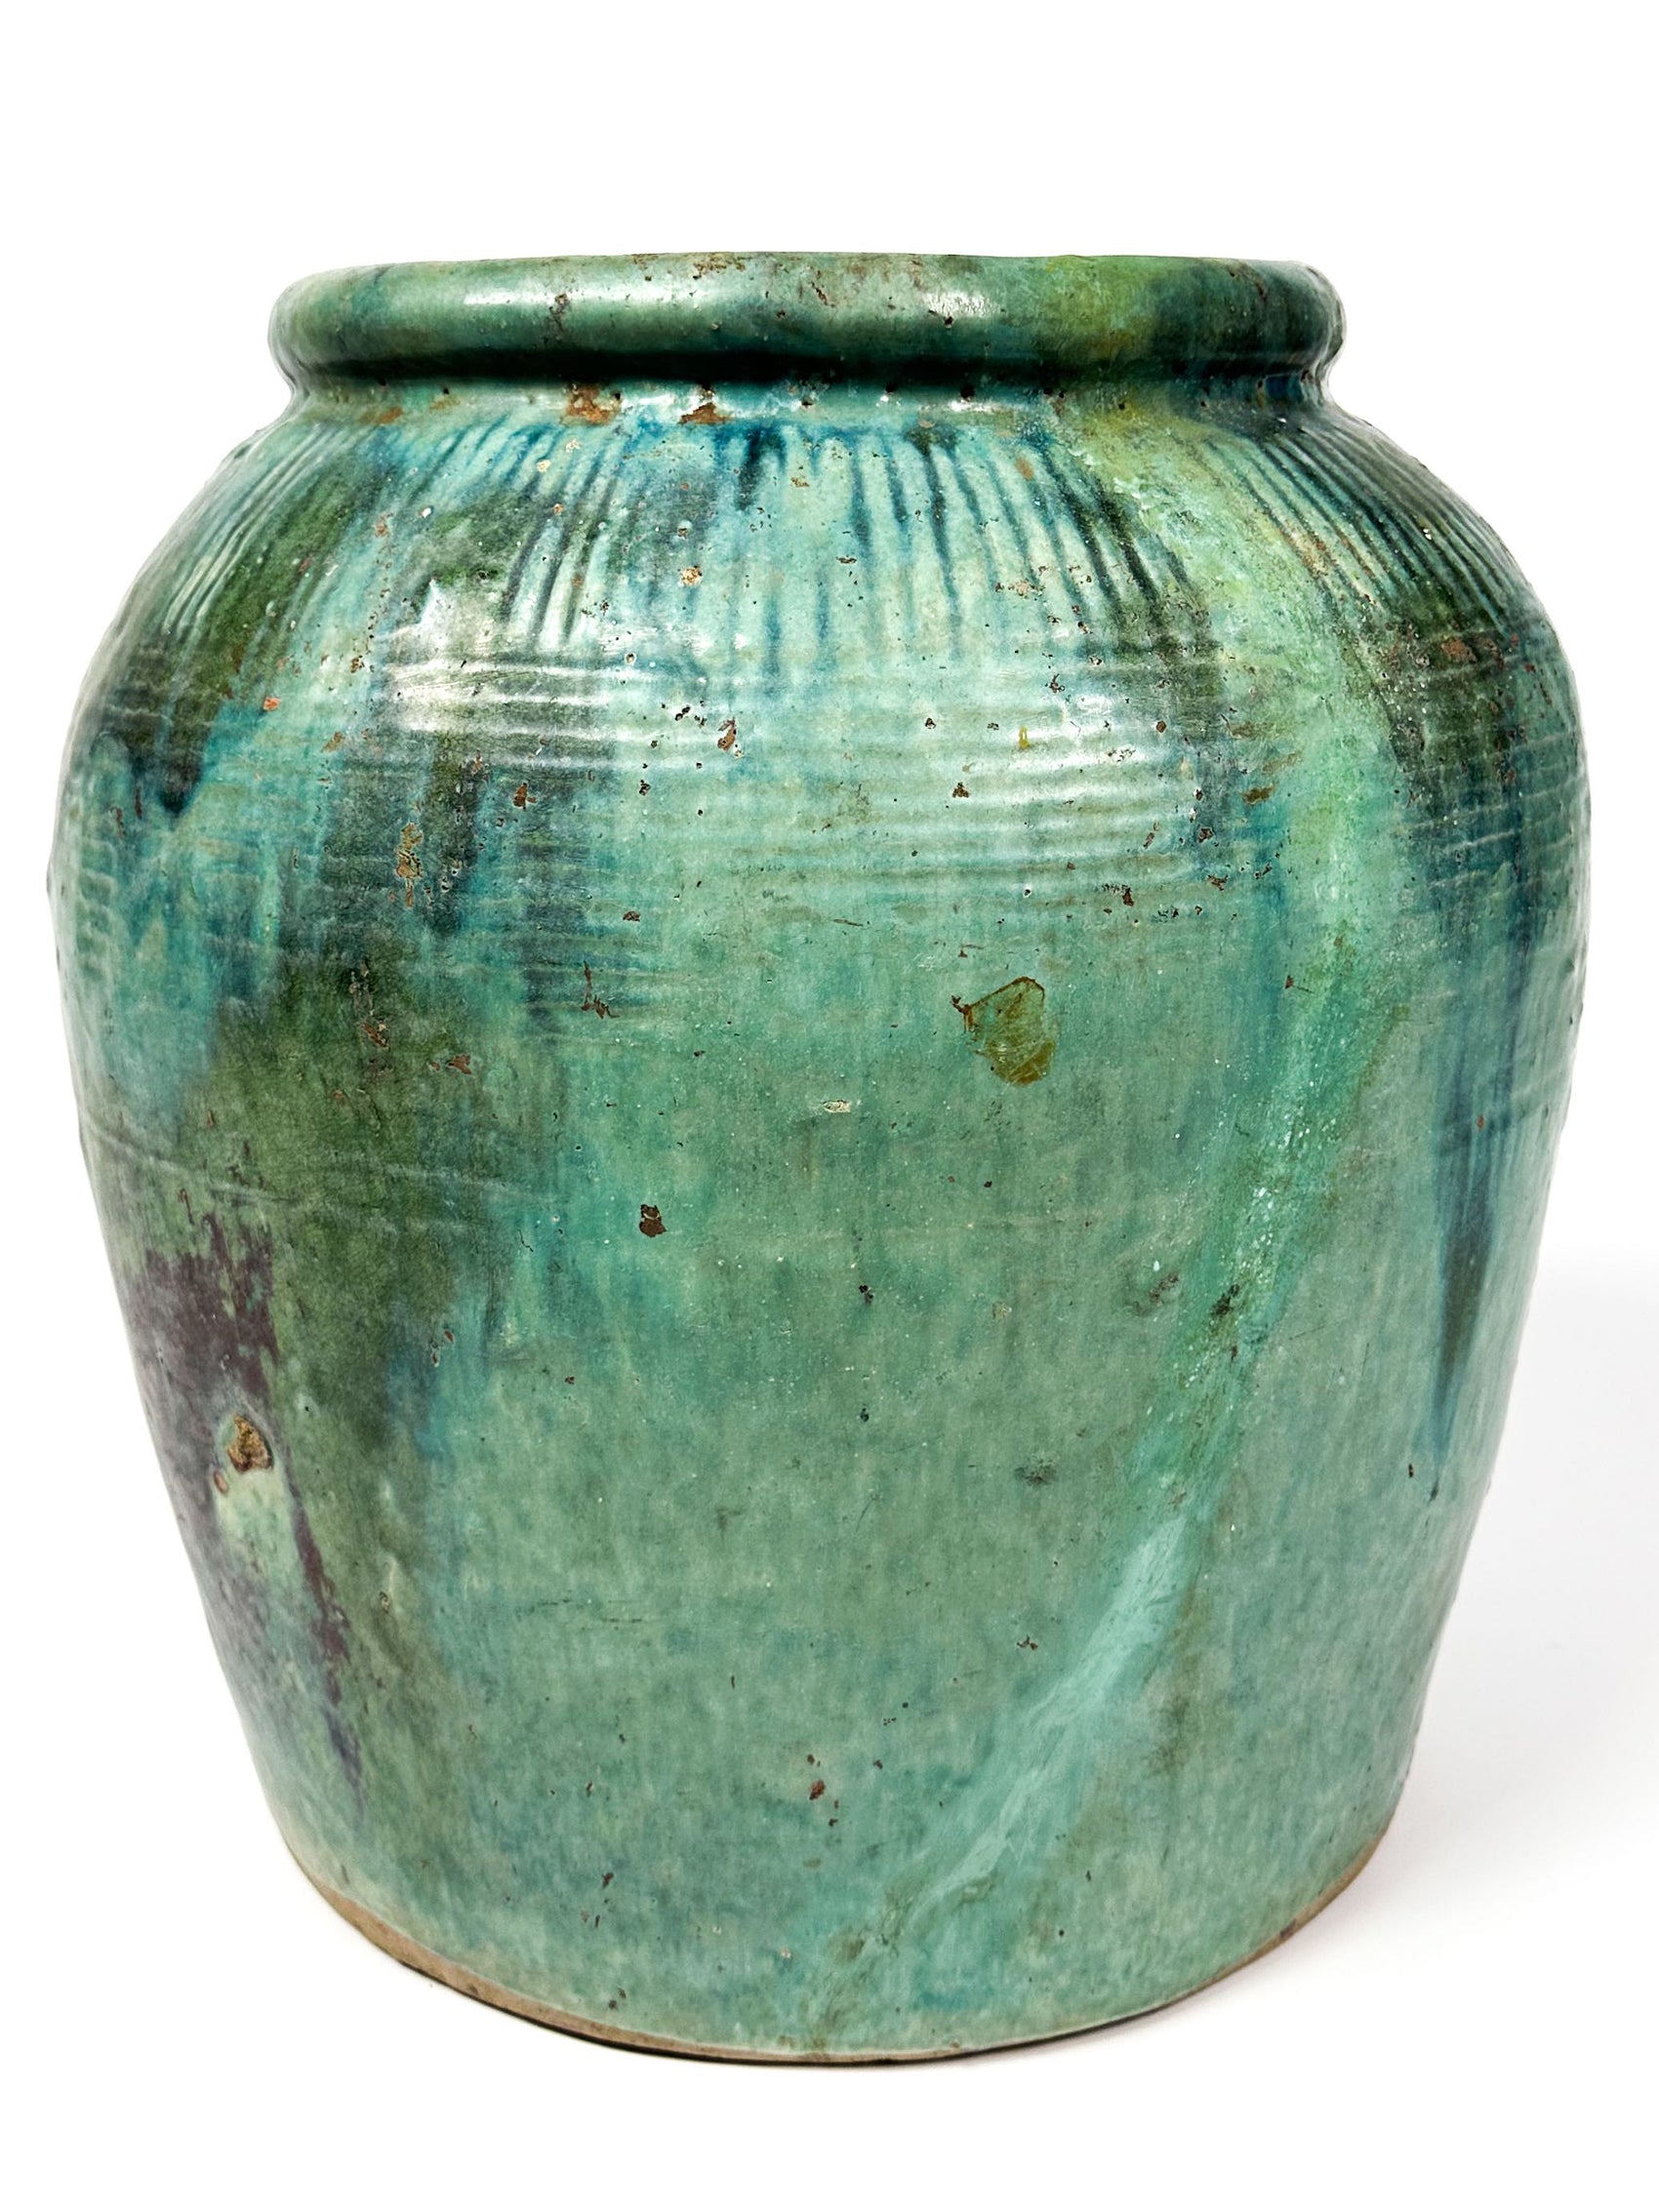 The antique Borneo water jar green #2